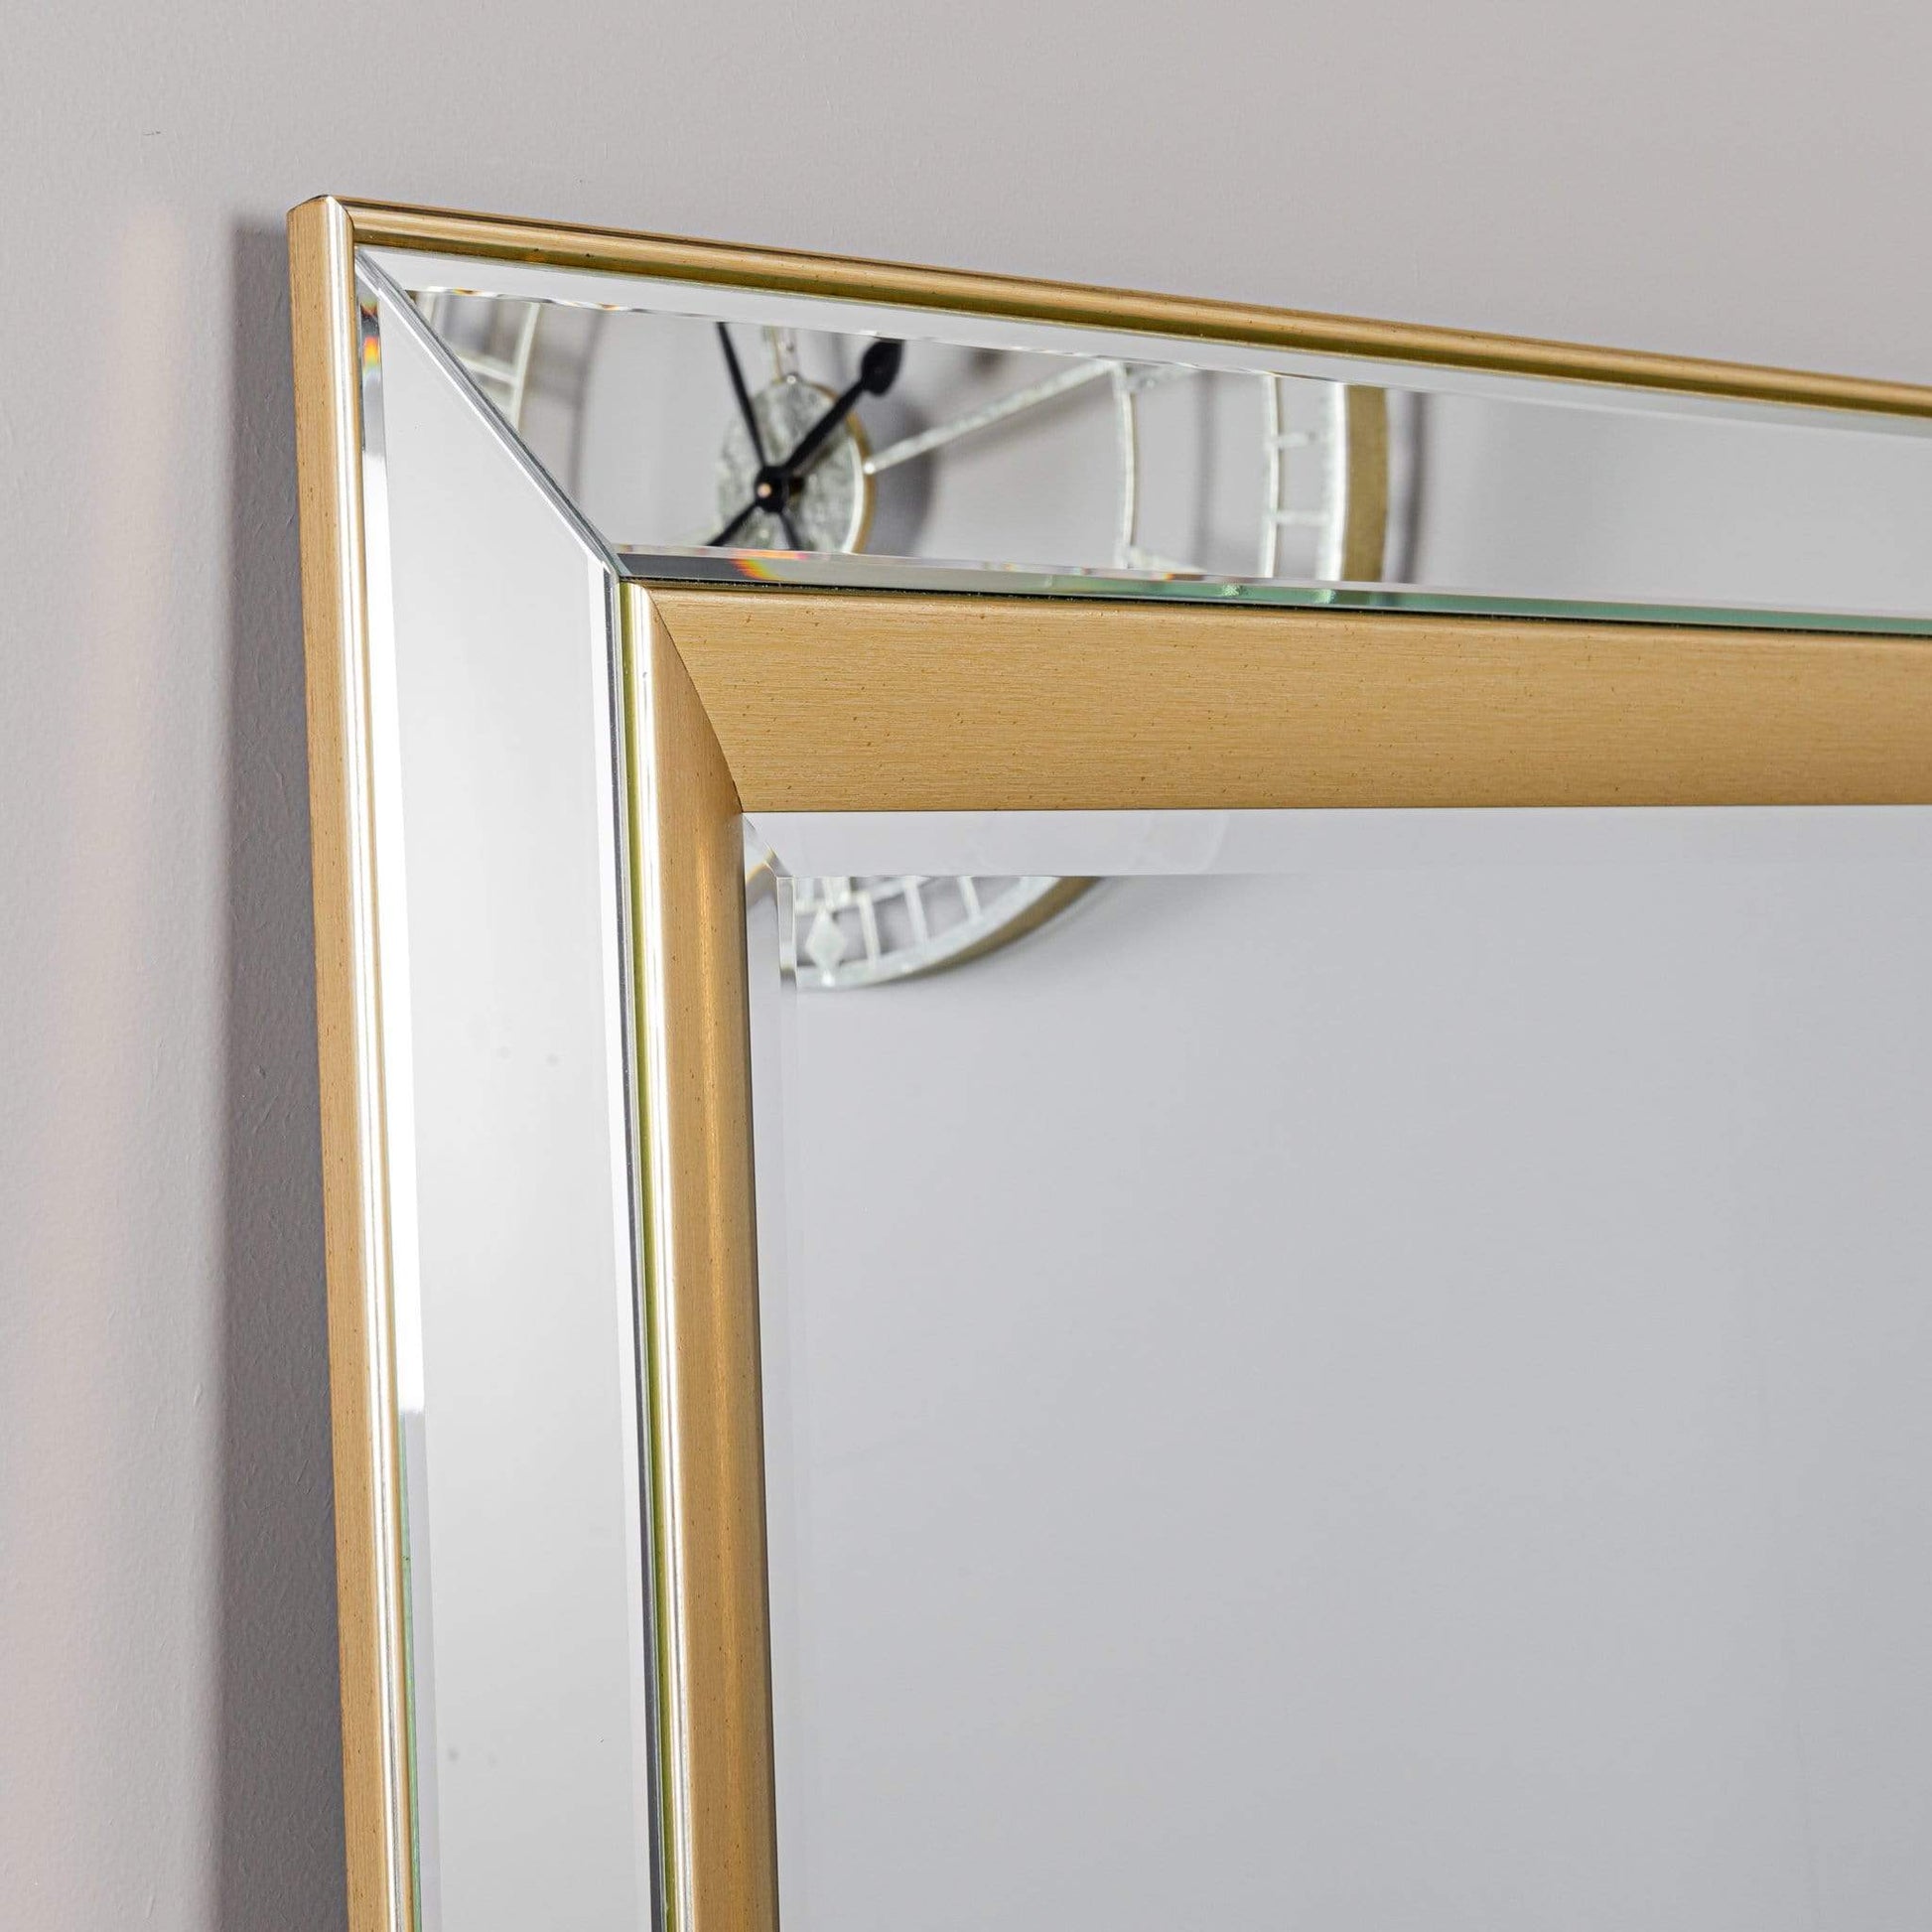 Mirrors  -  Gallery Phantom Leaner Mirror - 228589  -  50134288